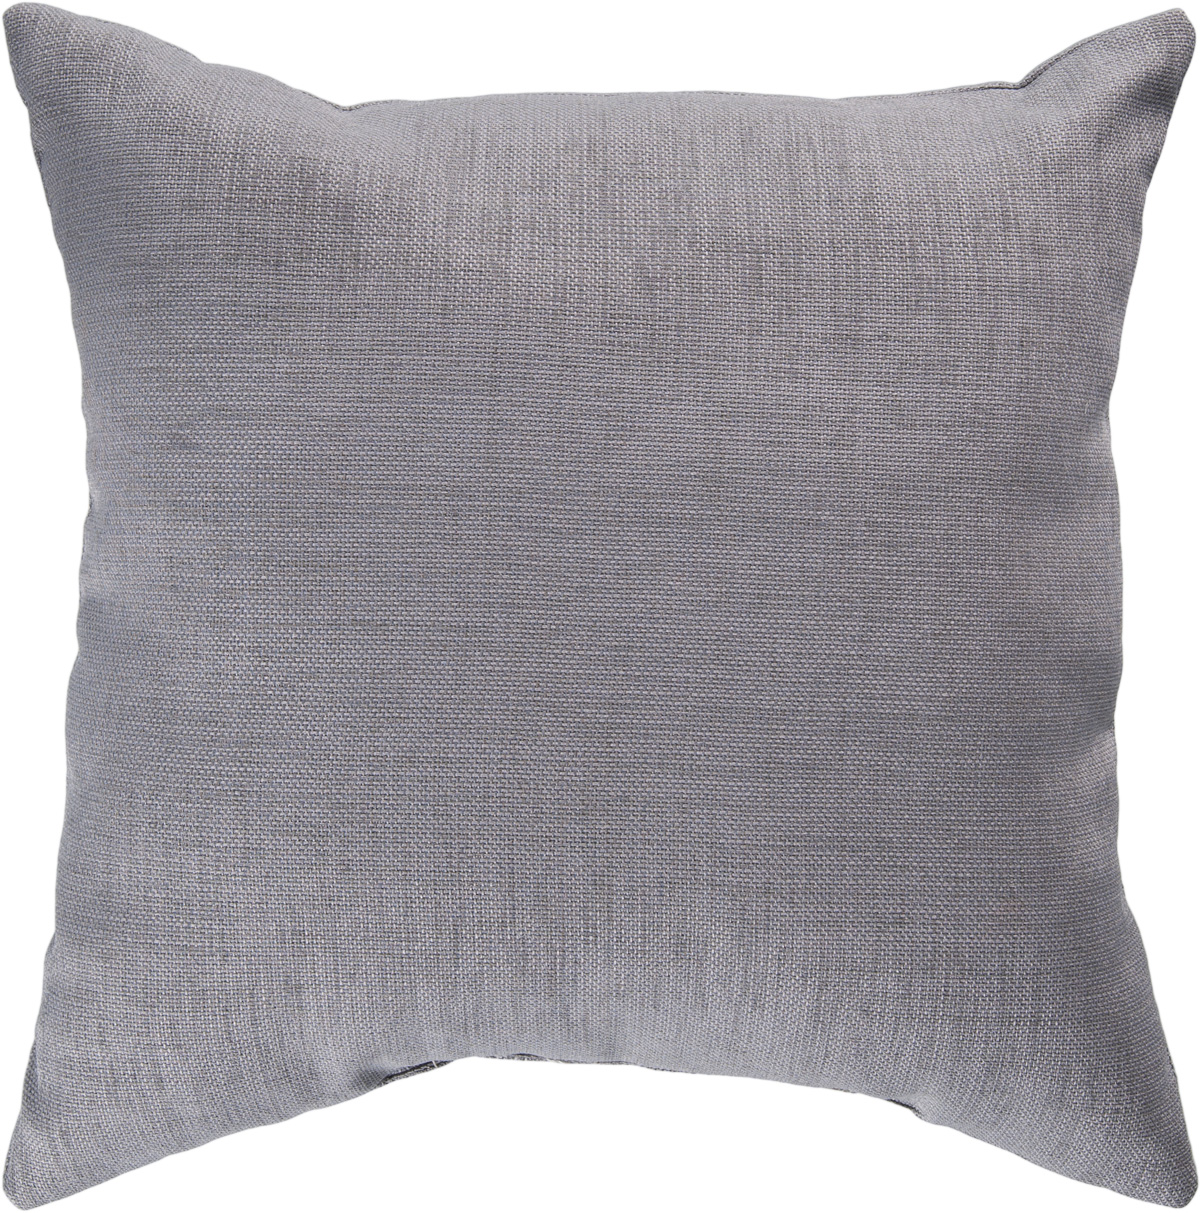 Surya Surya Pillows Indoor/Outdoor Area Rug ZZ406 Dove Gray Solid Striated